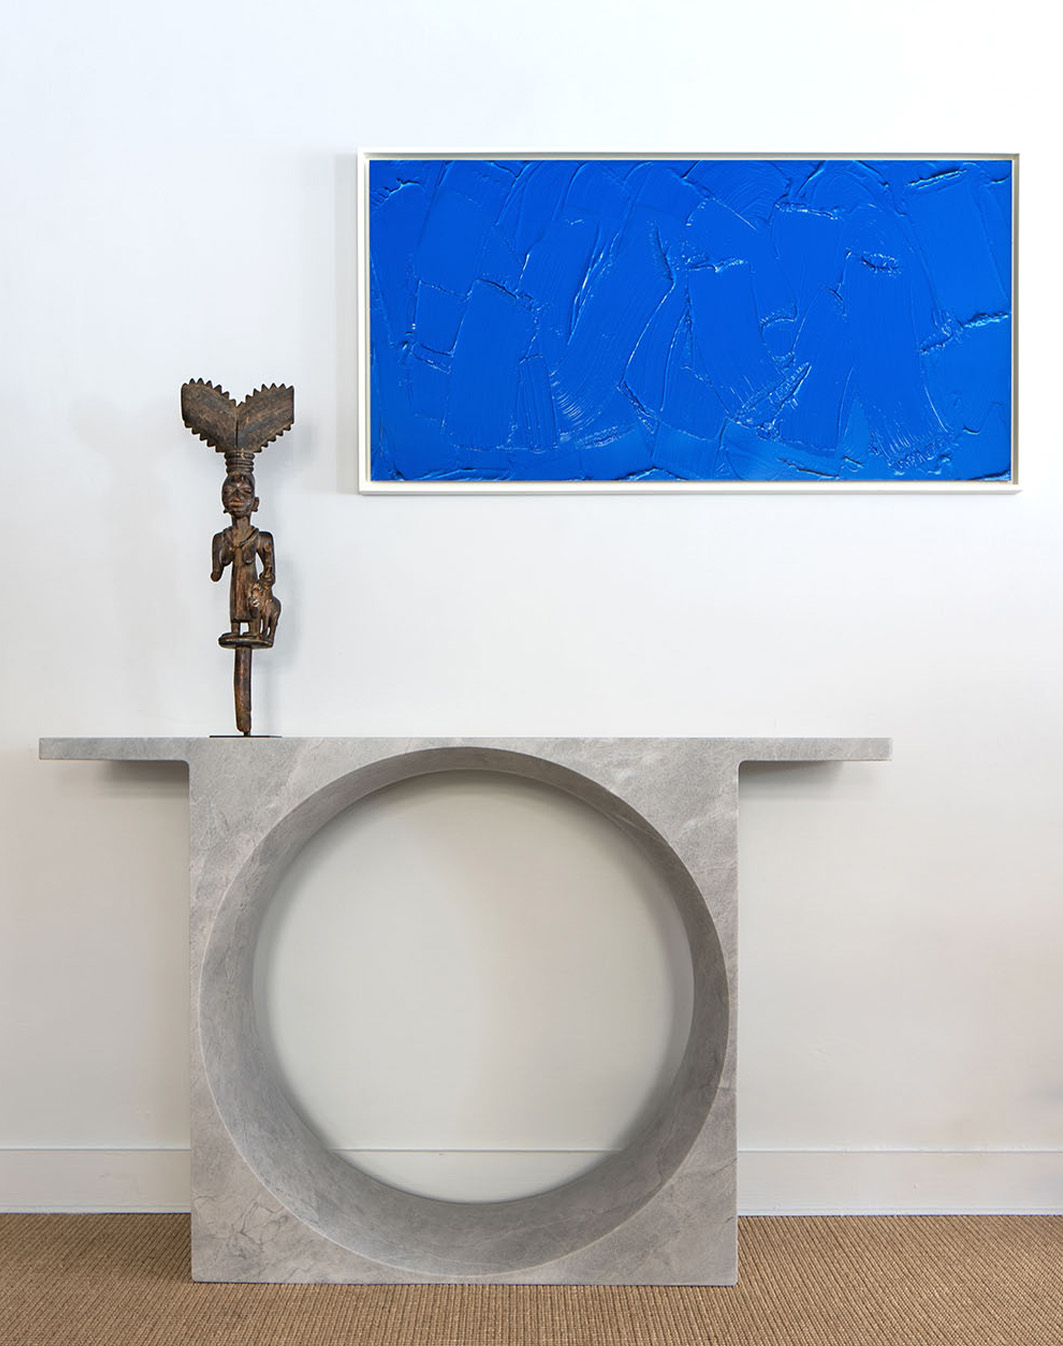 Guillaume Bardet - Lucas Ratton x kamel mennour x Galerie kreo @Saint-Tropez